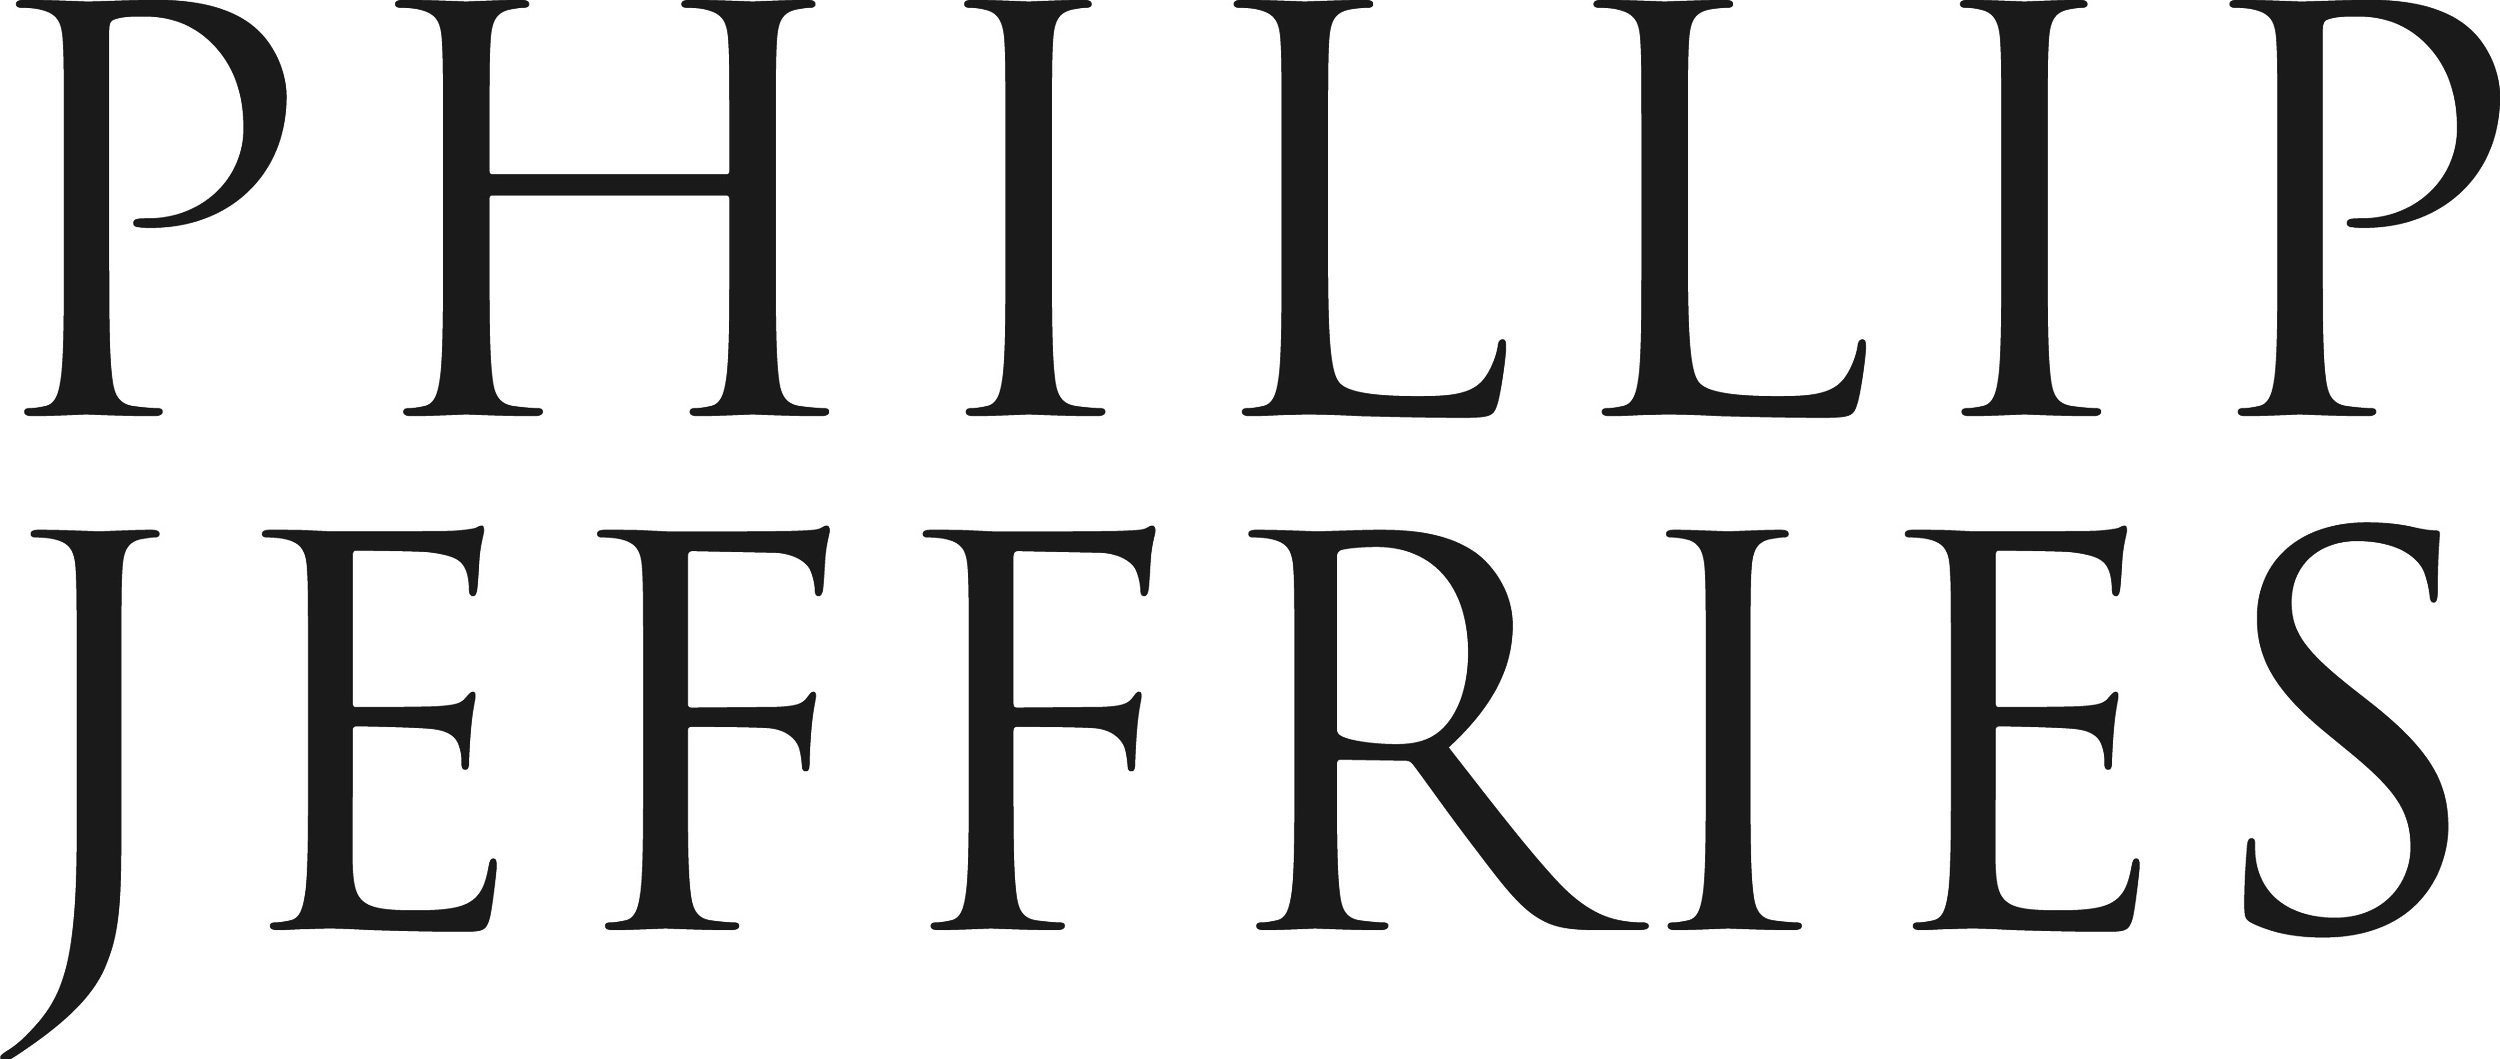 Phillip-Jeffries-logo.jpg